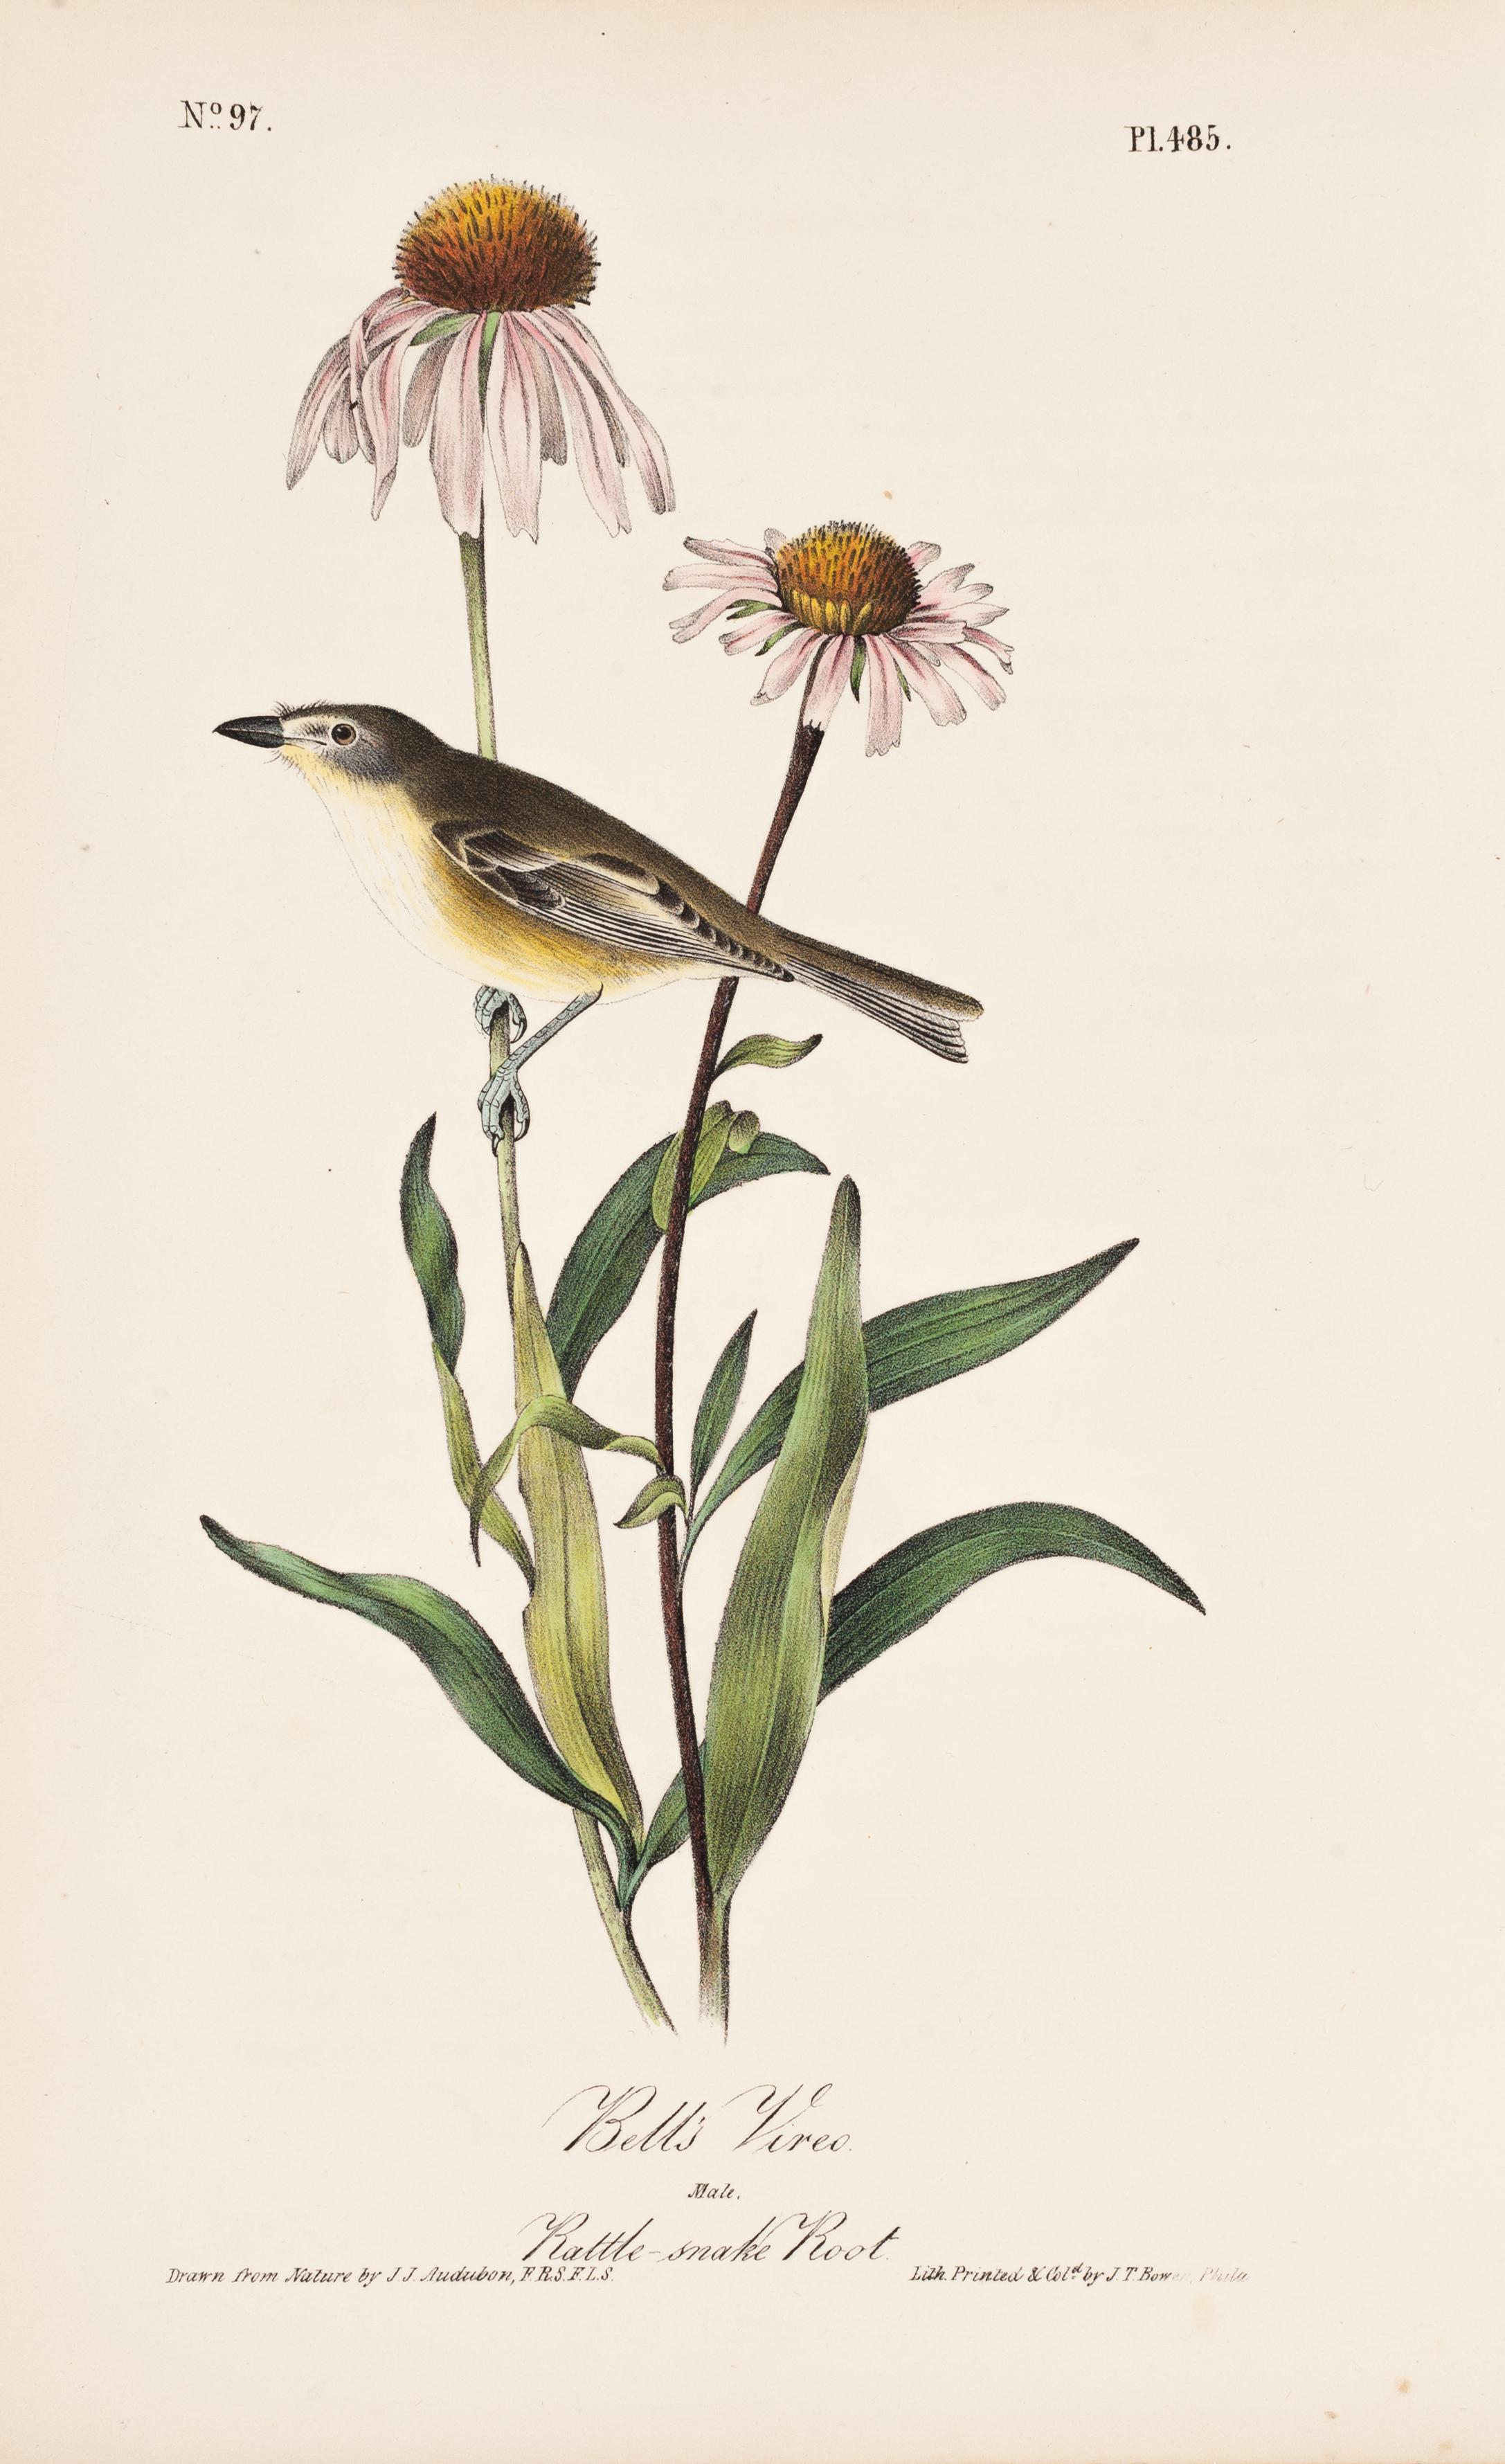 John James Audubon Animal Print - The Birds of America "Bell's Vireo" Plate 485